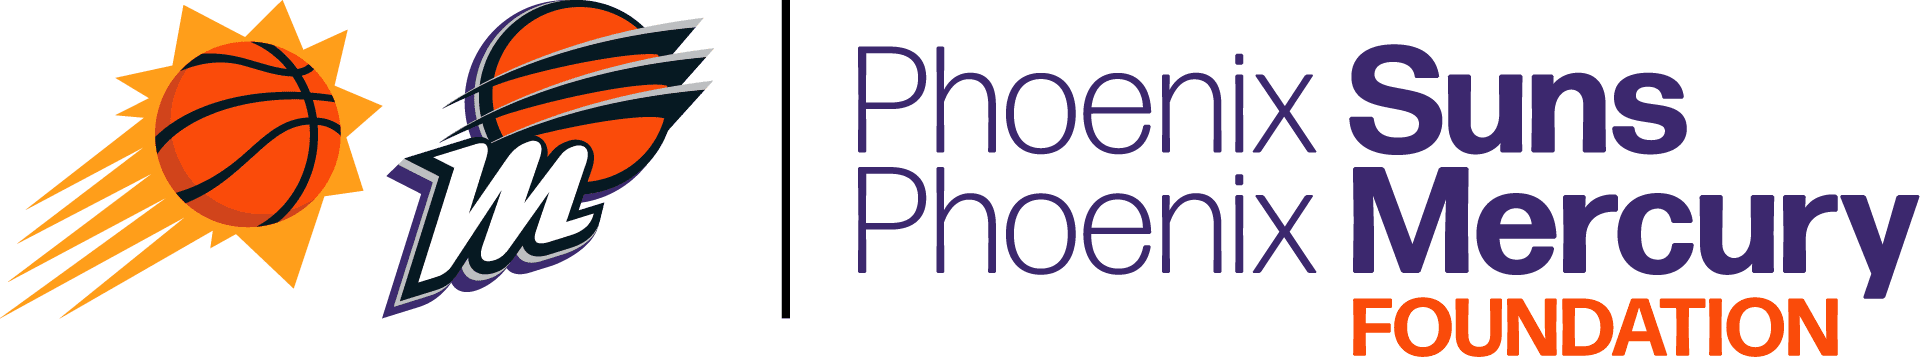 Phoenix suns/Mercury foundation